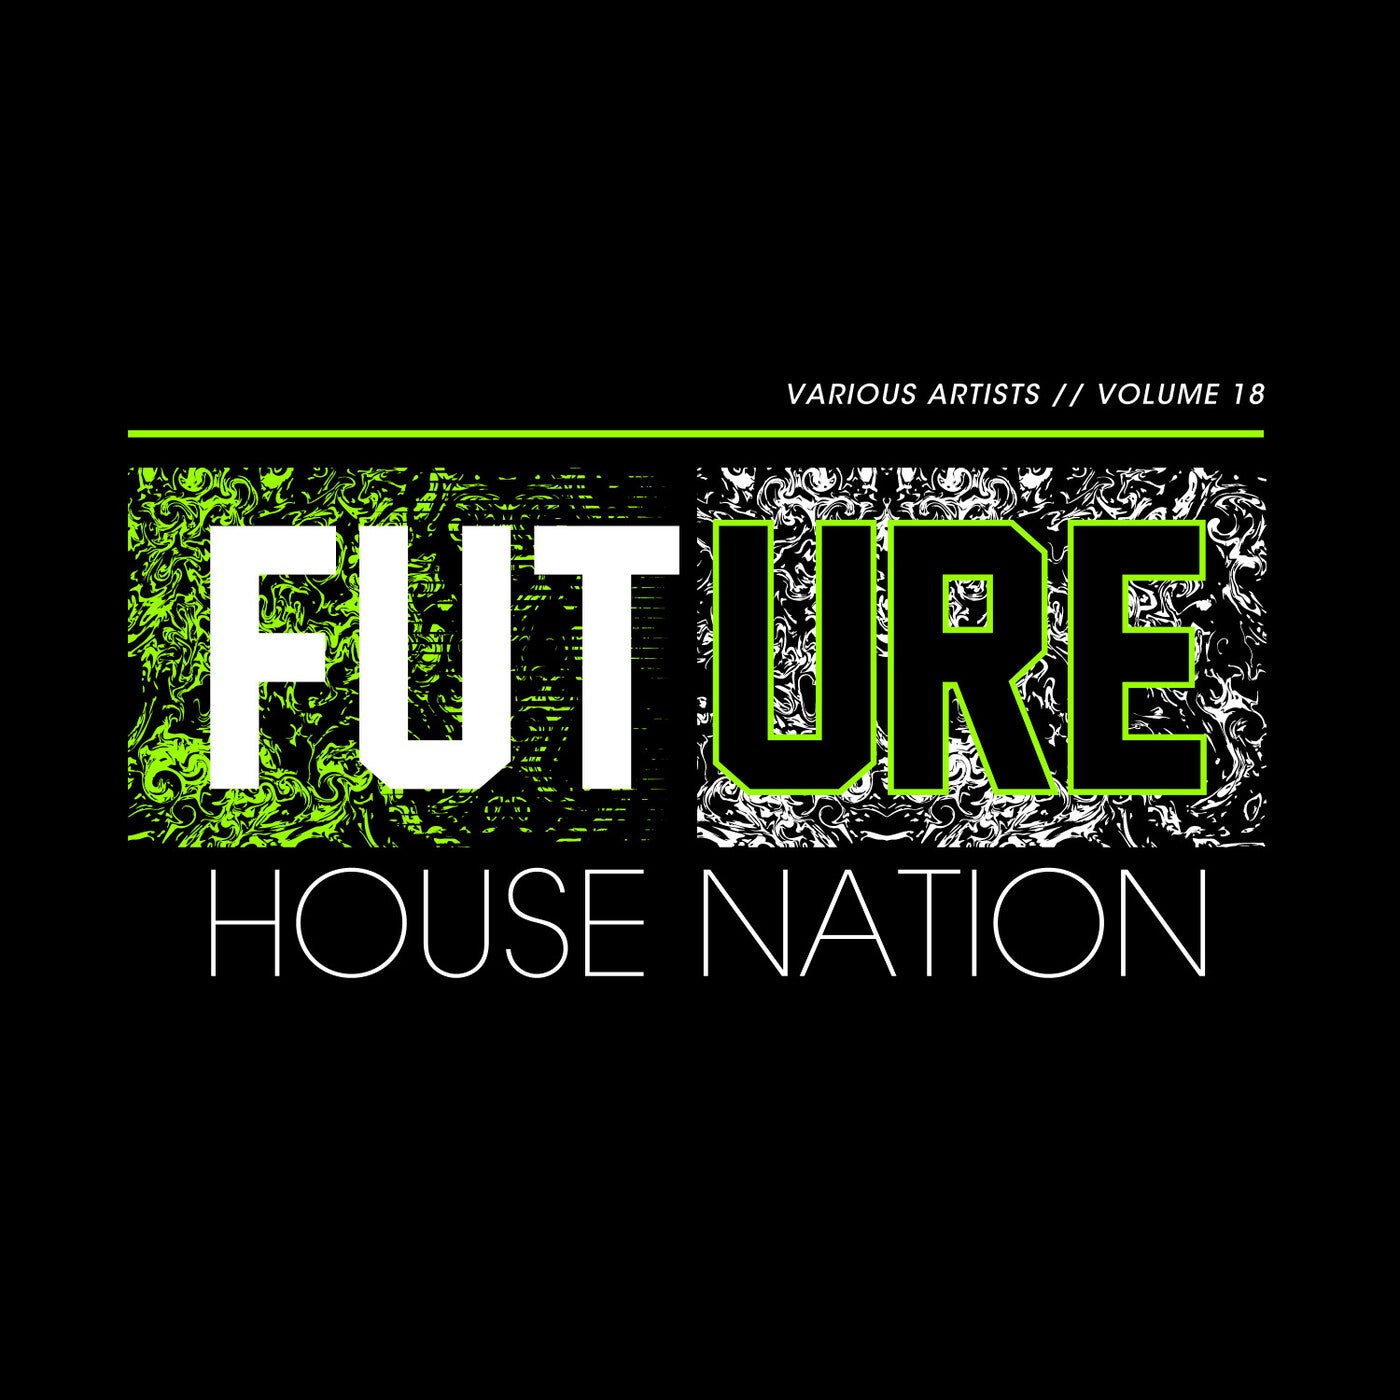 Future House Nation Vol. 18